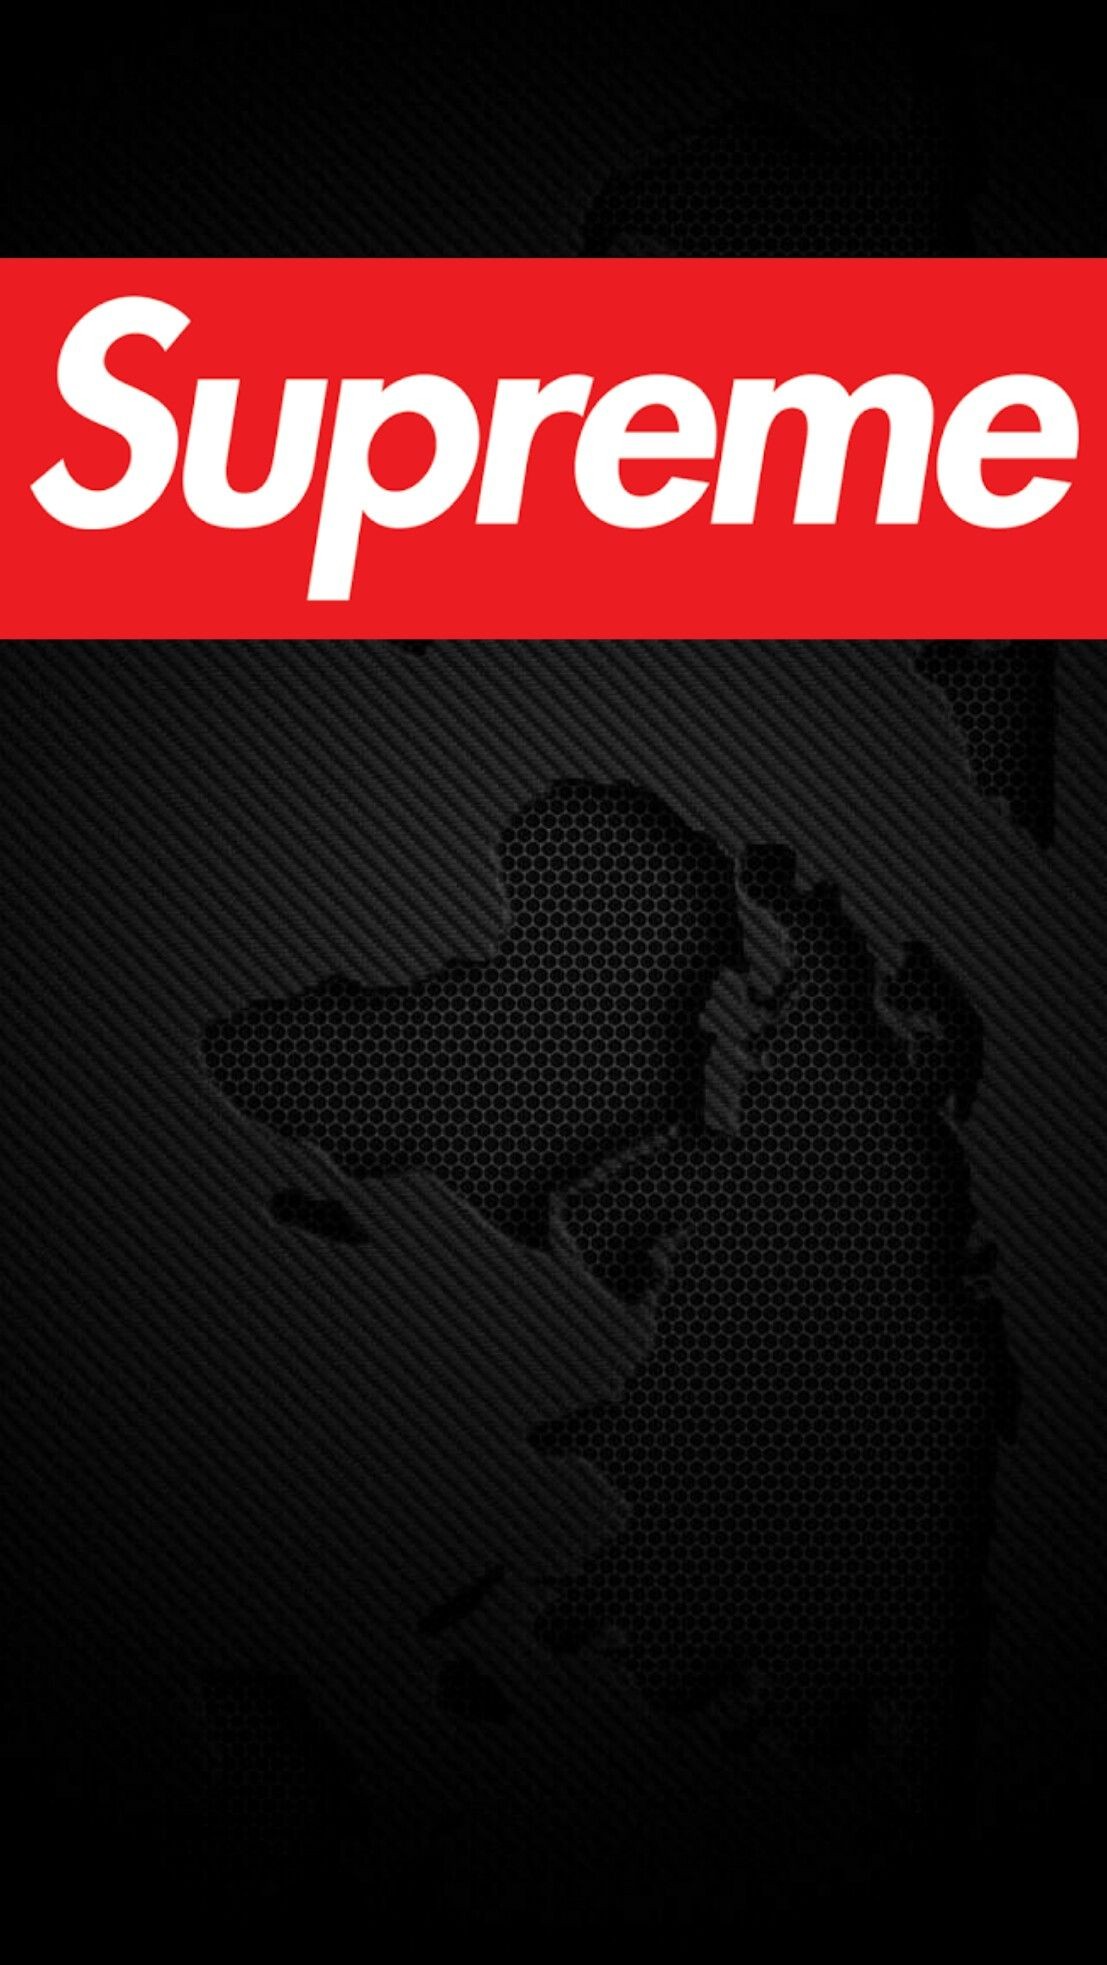 Supreme Wallpaper For Iphone - Free Download Supreme 4k - 1107x1965  Wallpaper 